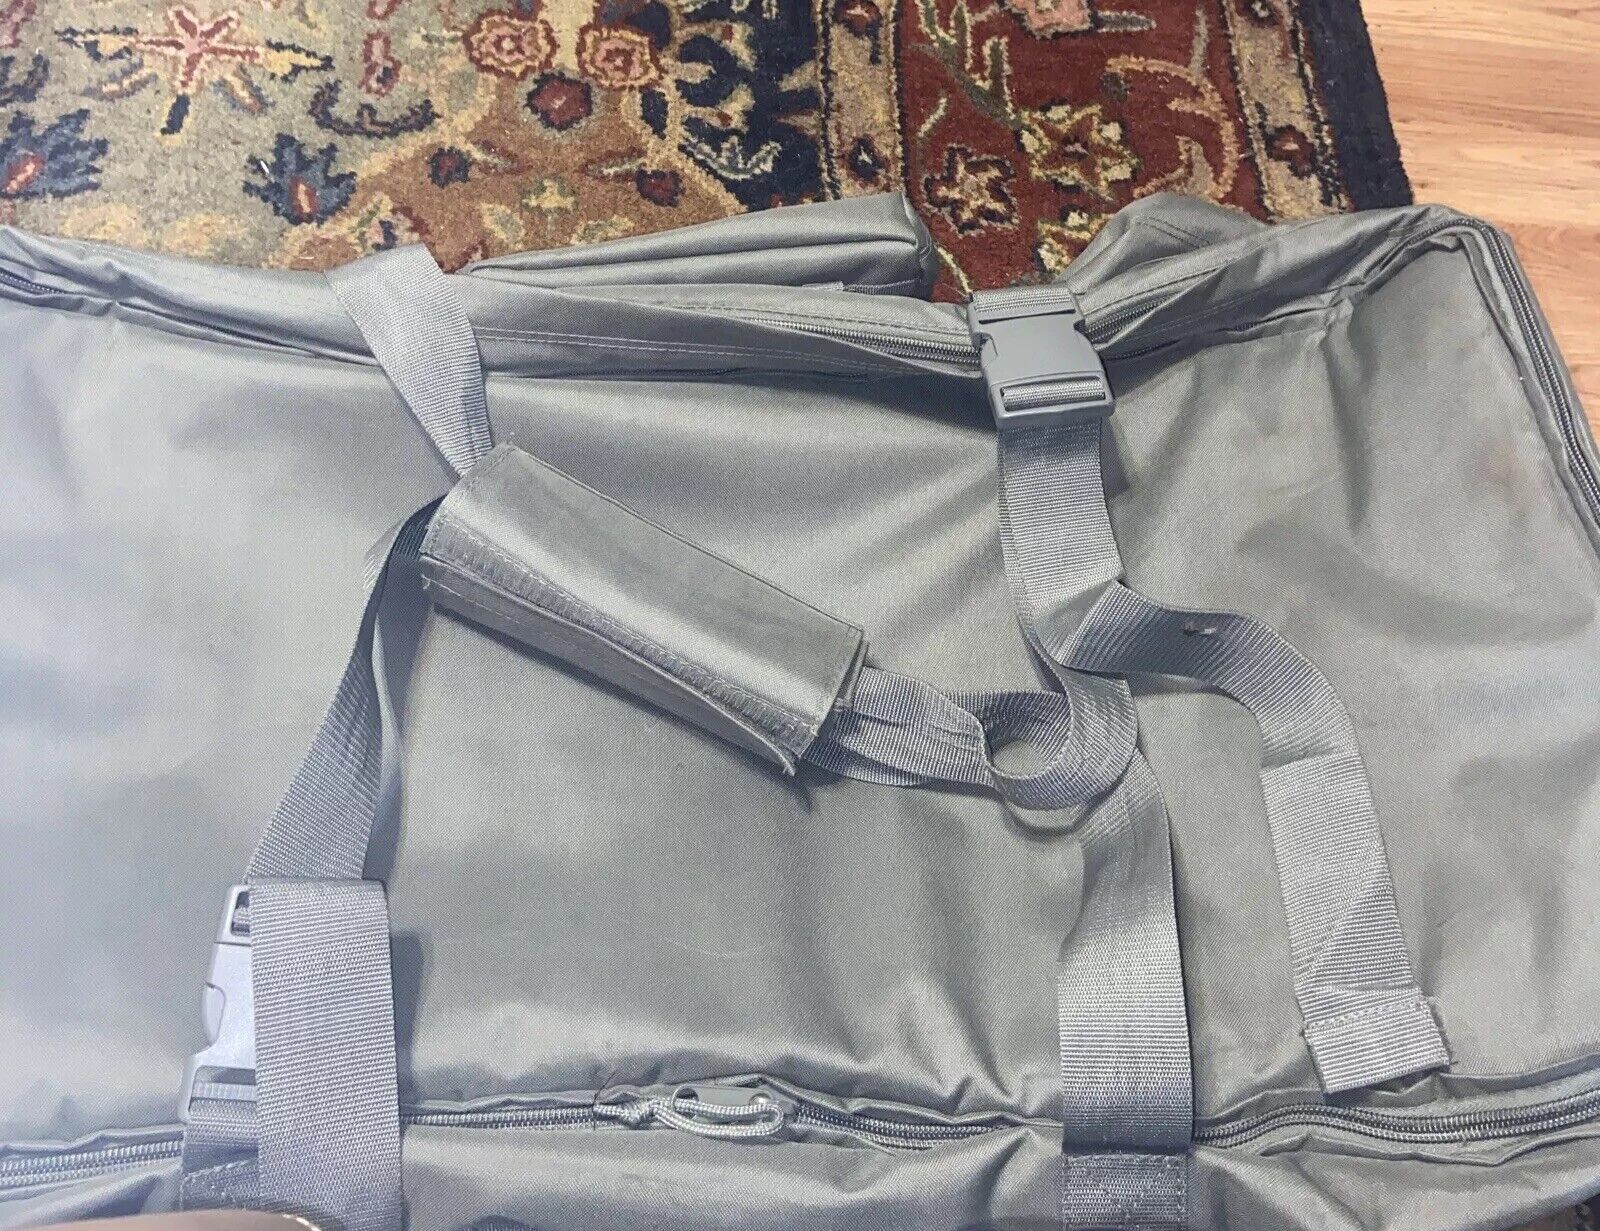 Sandpiper Of California Rolling Duffel  Travel Bag Luggage - 36” X 16”